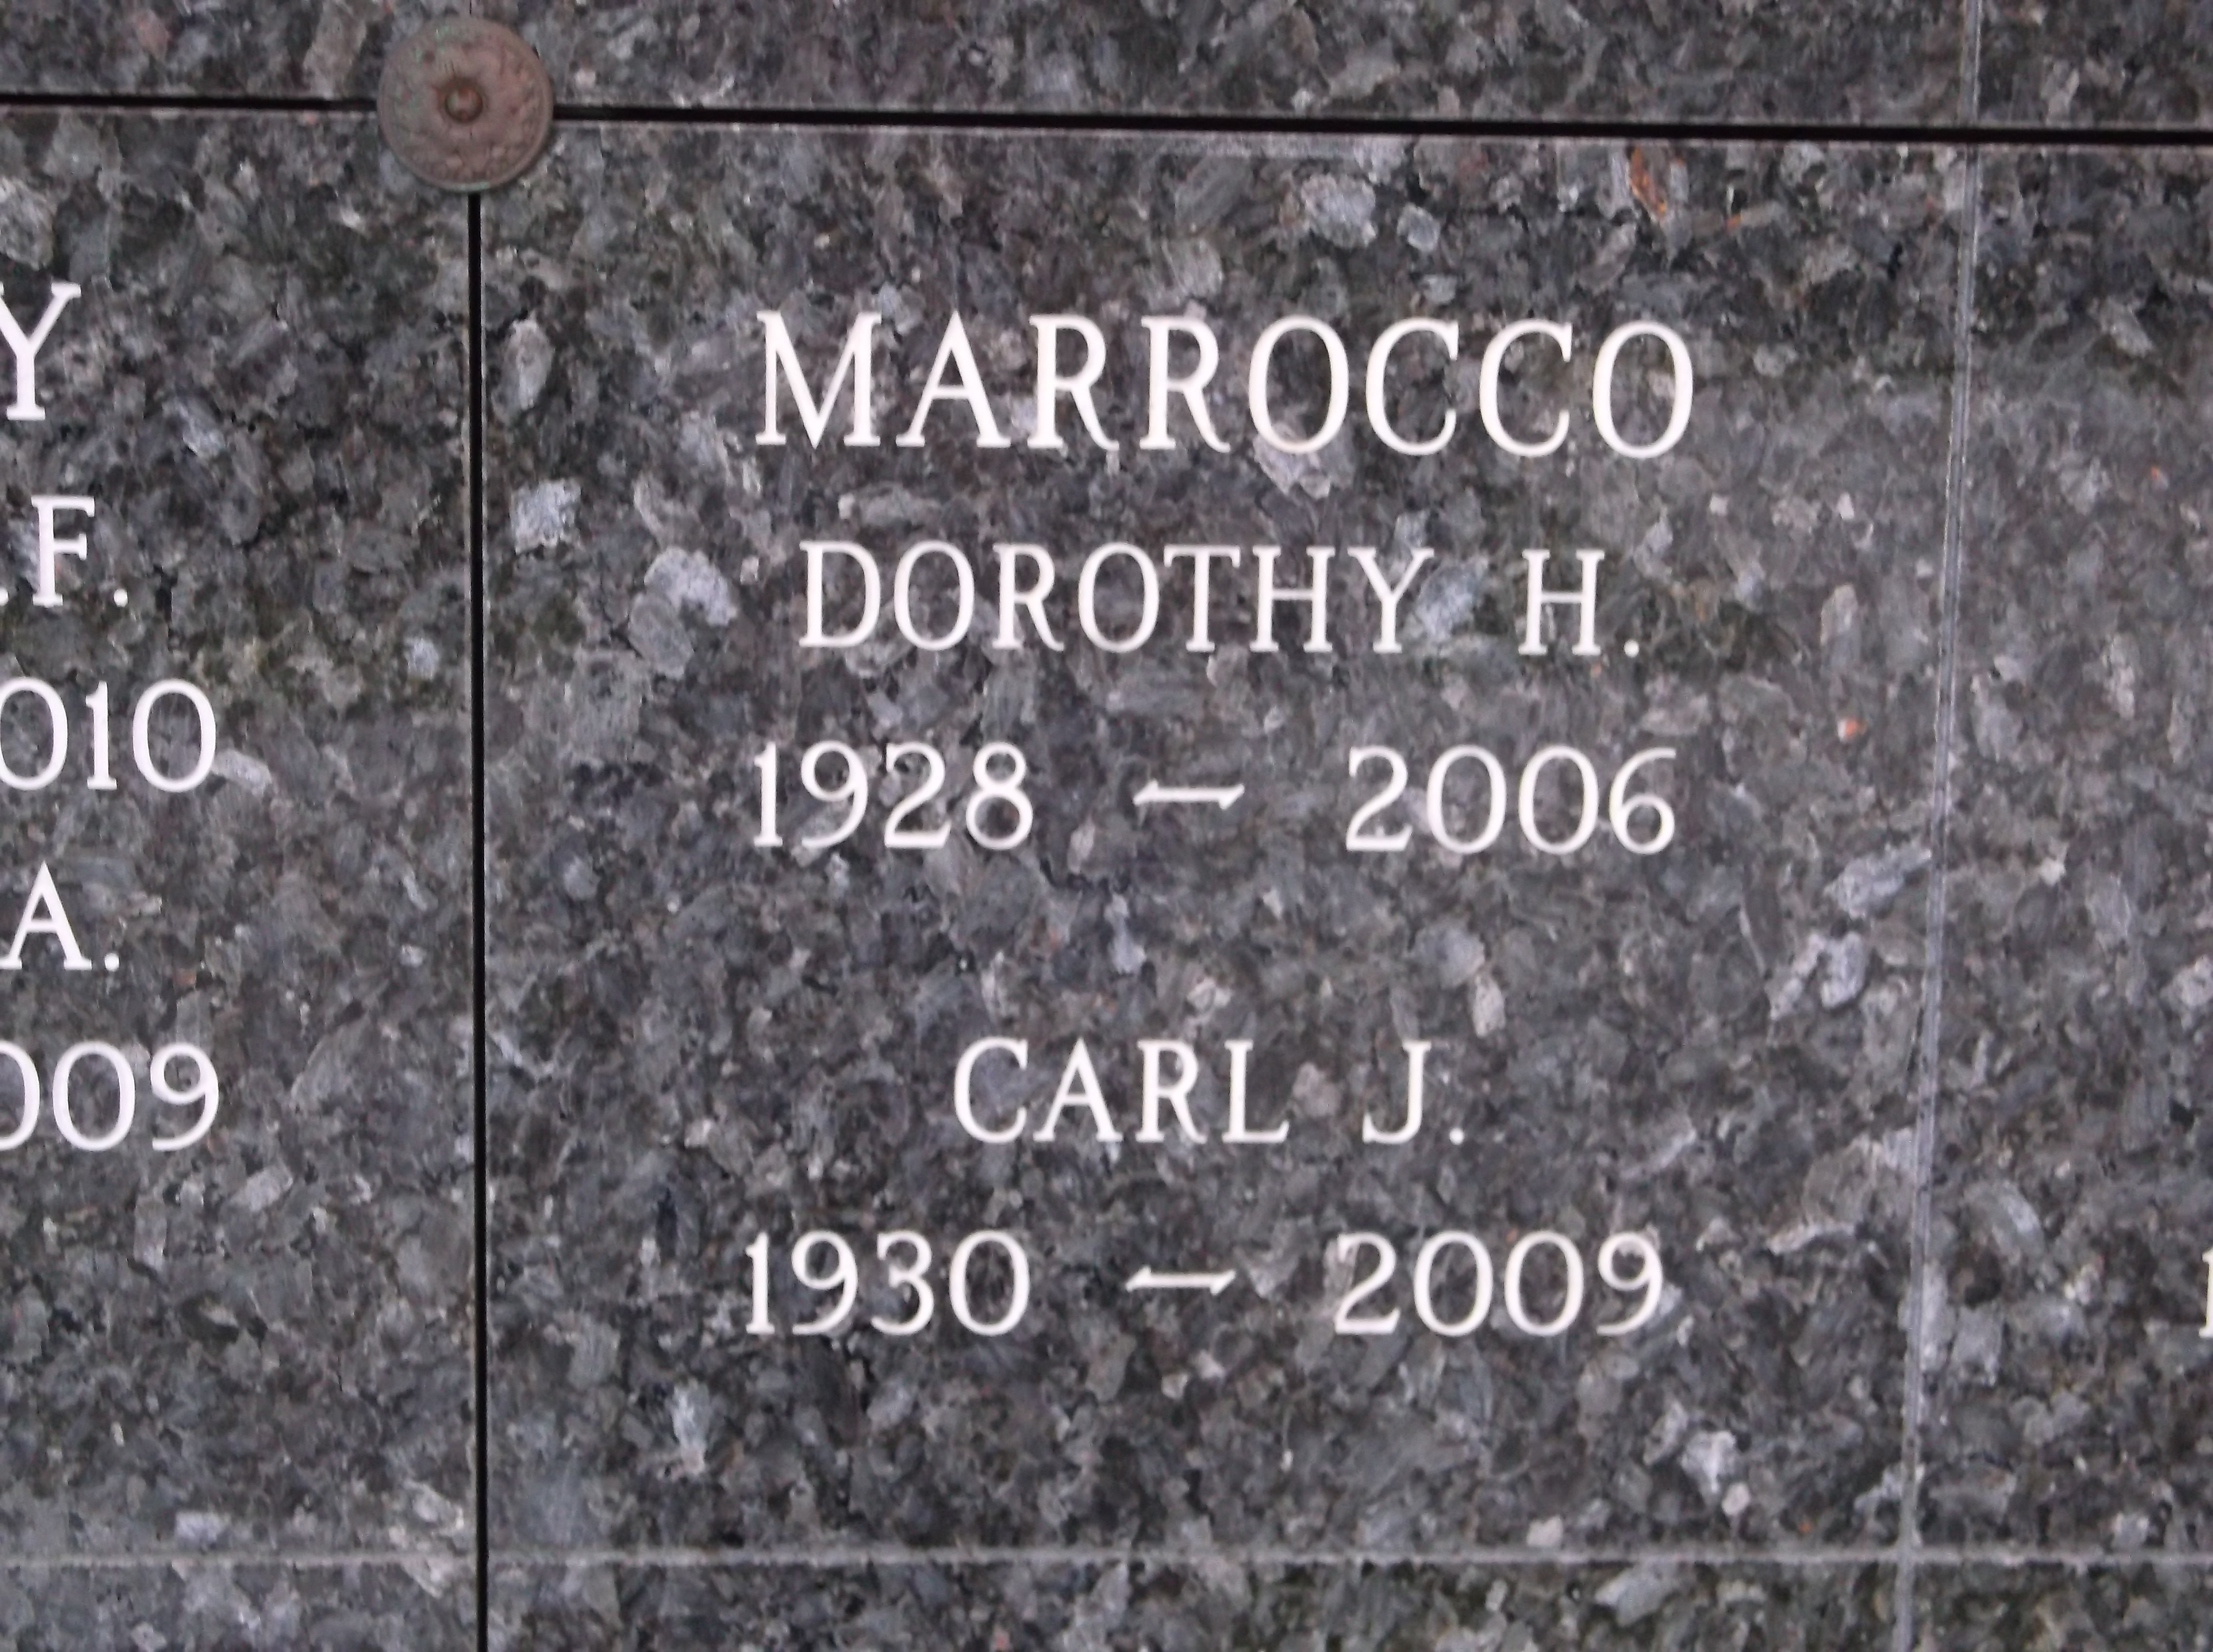 Dorothy H Marrocco